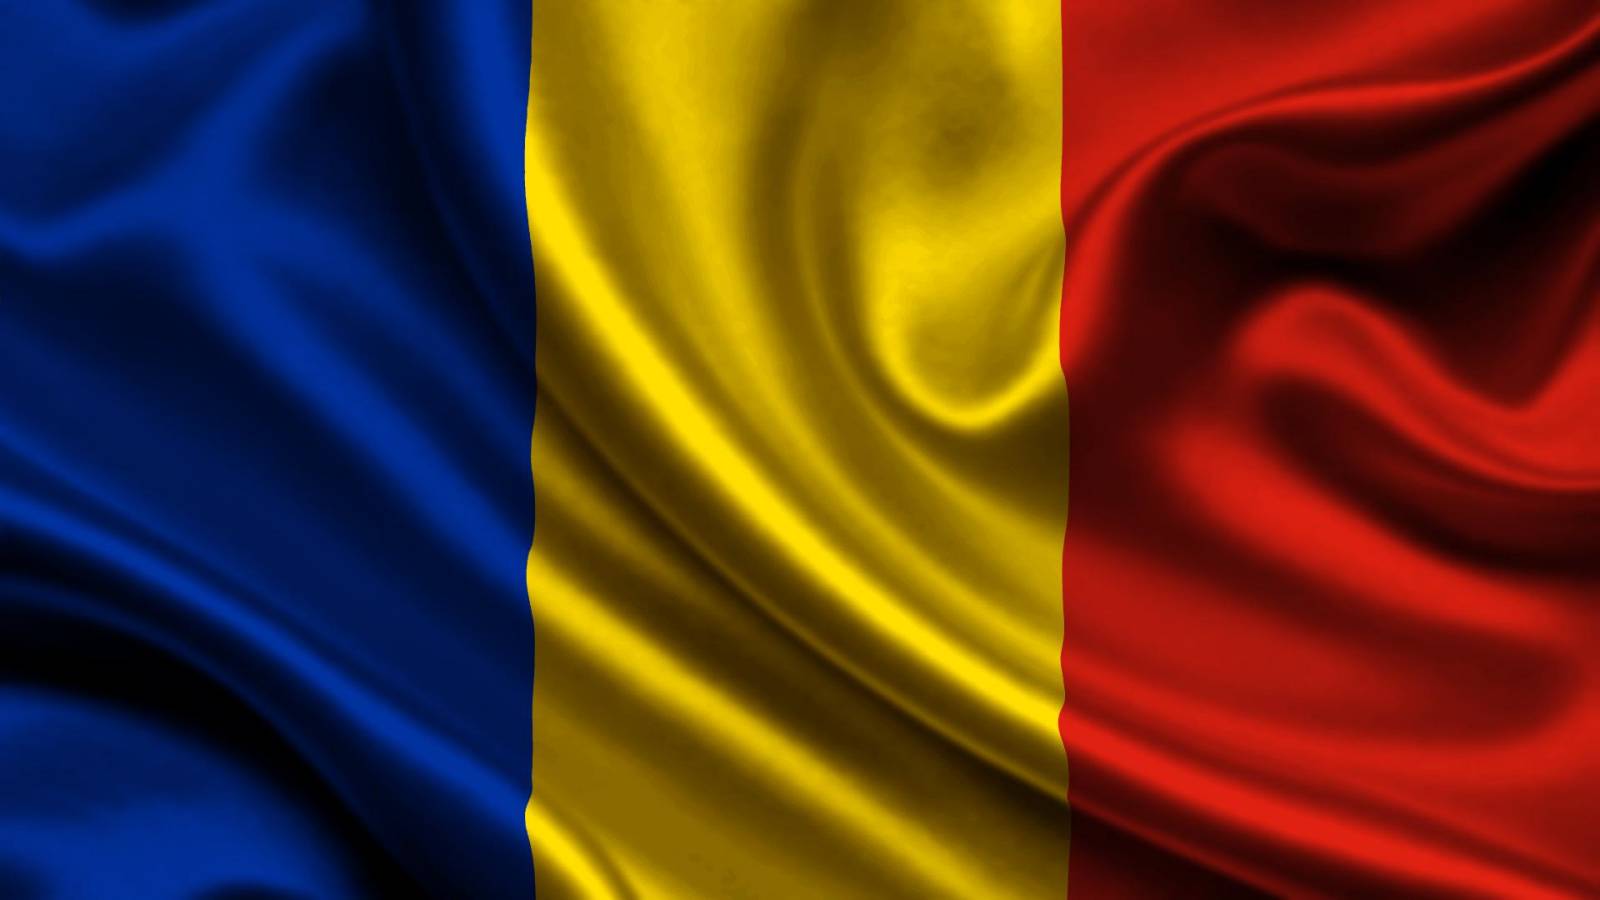 Romania Serious Situation Mandatory Measures Wave 4